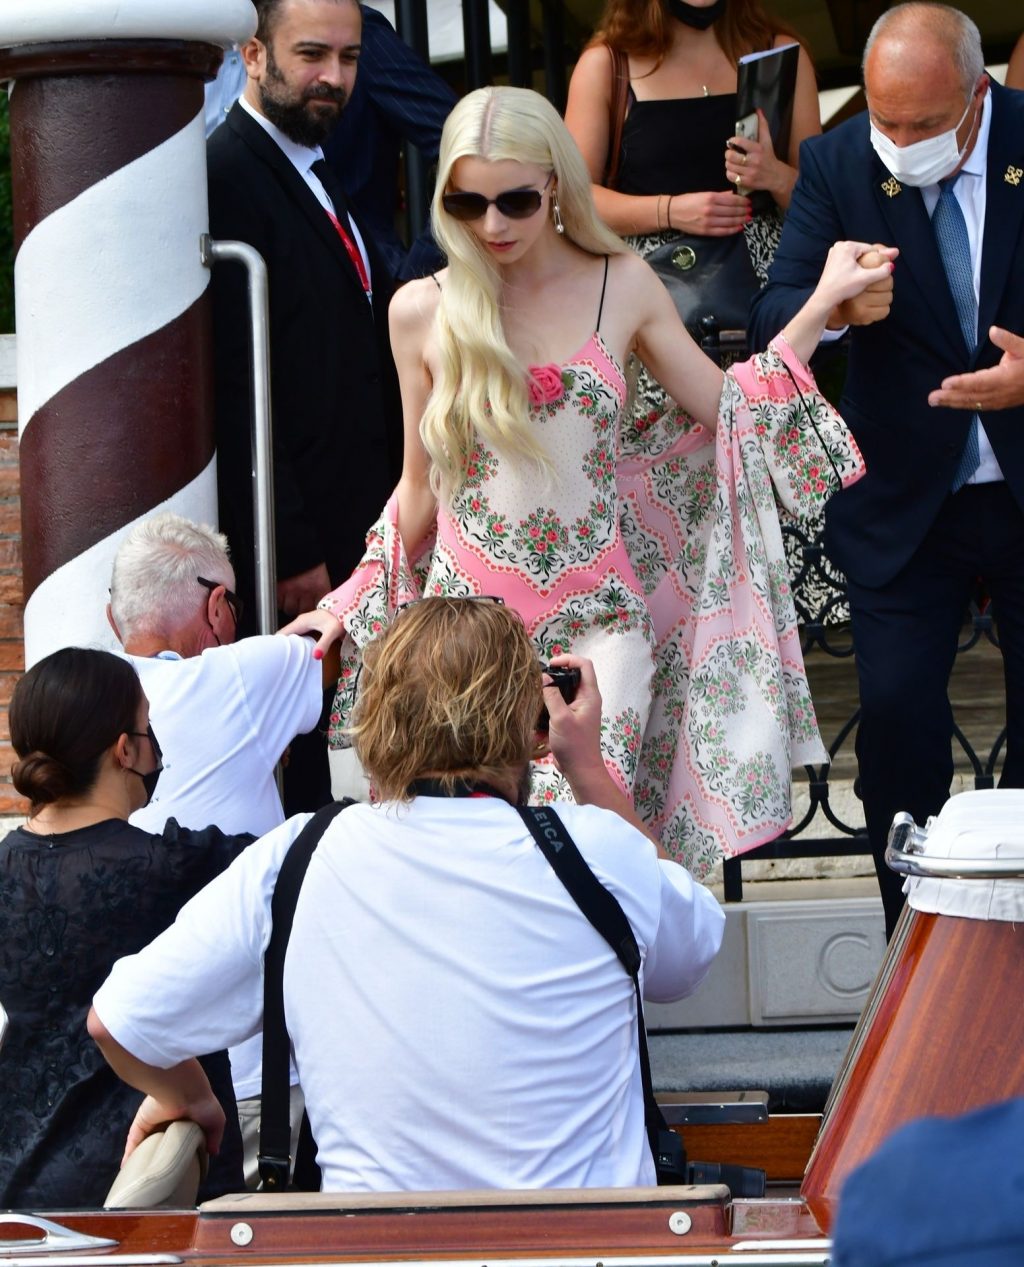 Anya Taylor-Joy is Seen Arriving at the 78th Venice International Film Festival (140 Photos)